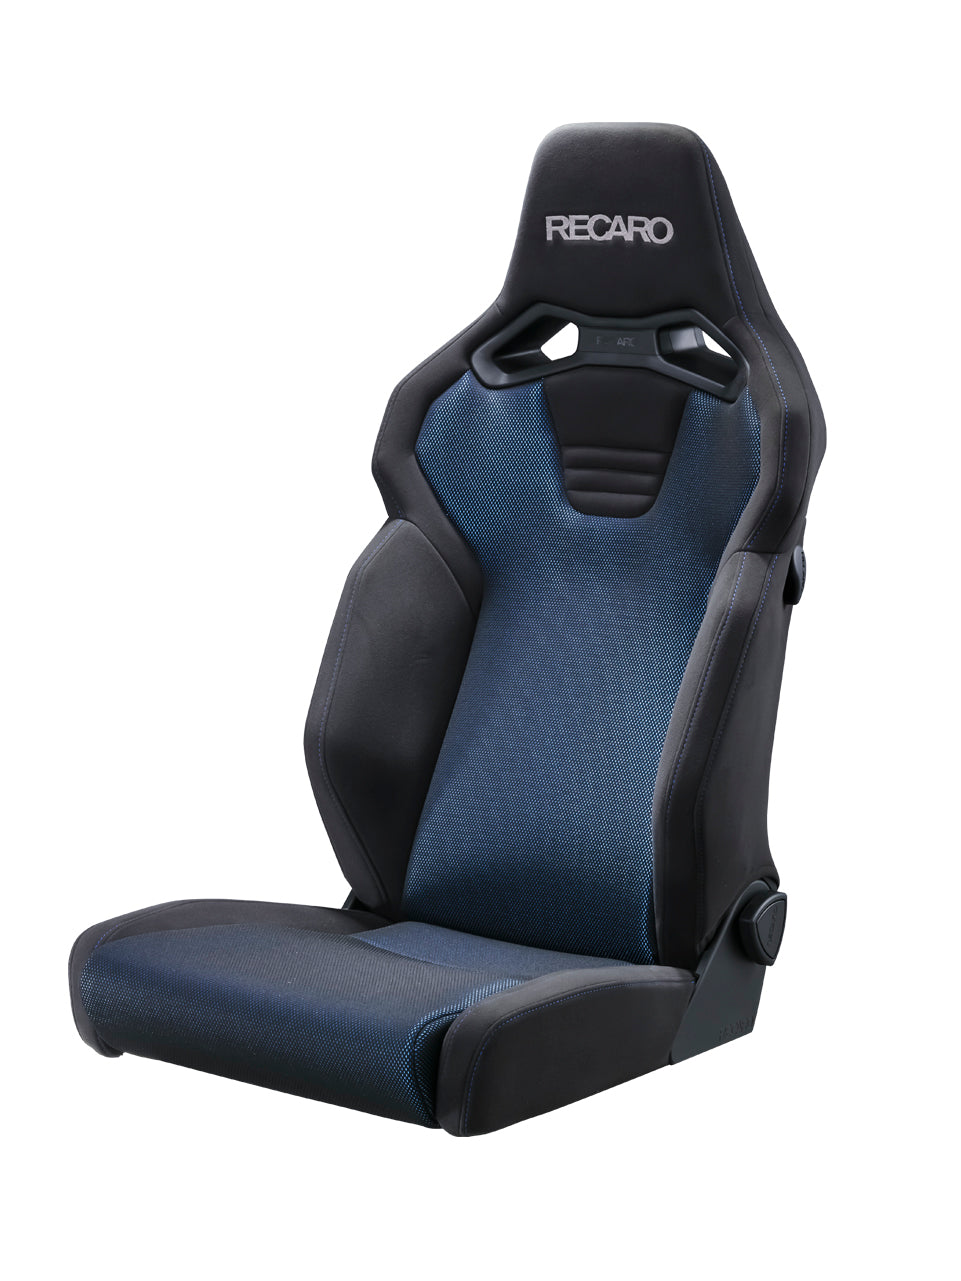 RECARO SR-C BK100 A R BL BK BRILLIANT MESH BLUE AND KAMUI BLACK COLOR SEAT ARMREST ATTACHEBLE FOR  81-121.28.643-0